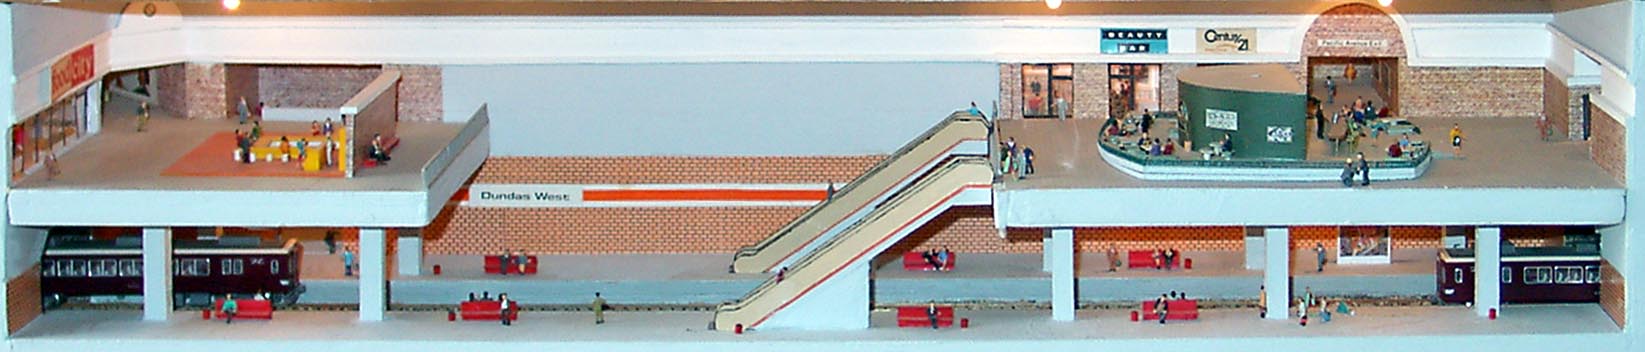 model of a subway station by Branden Gates Studios